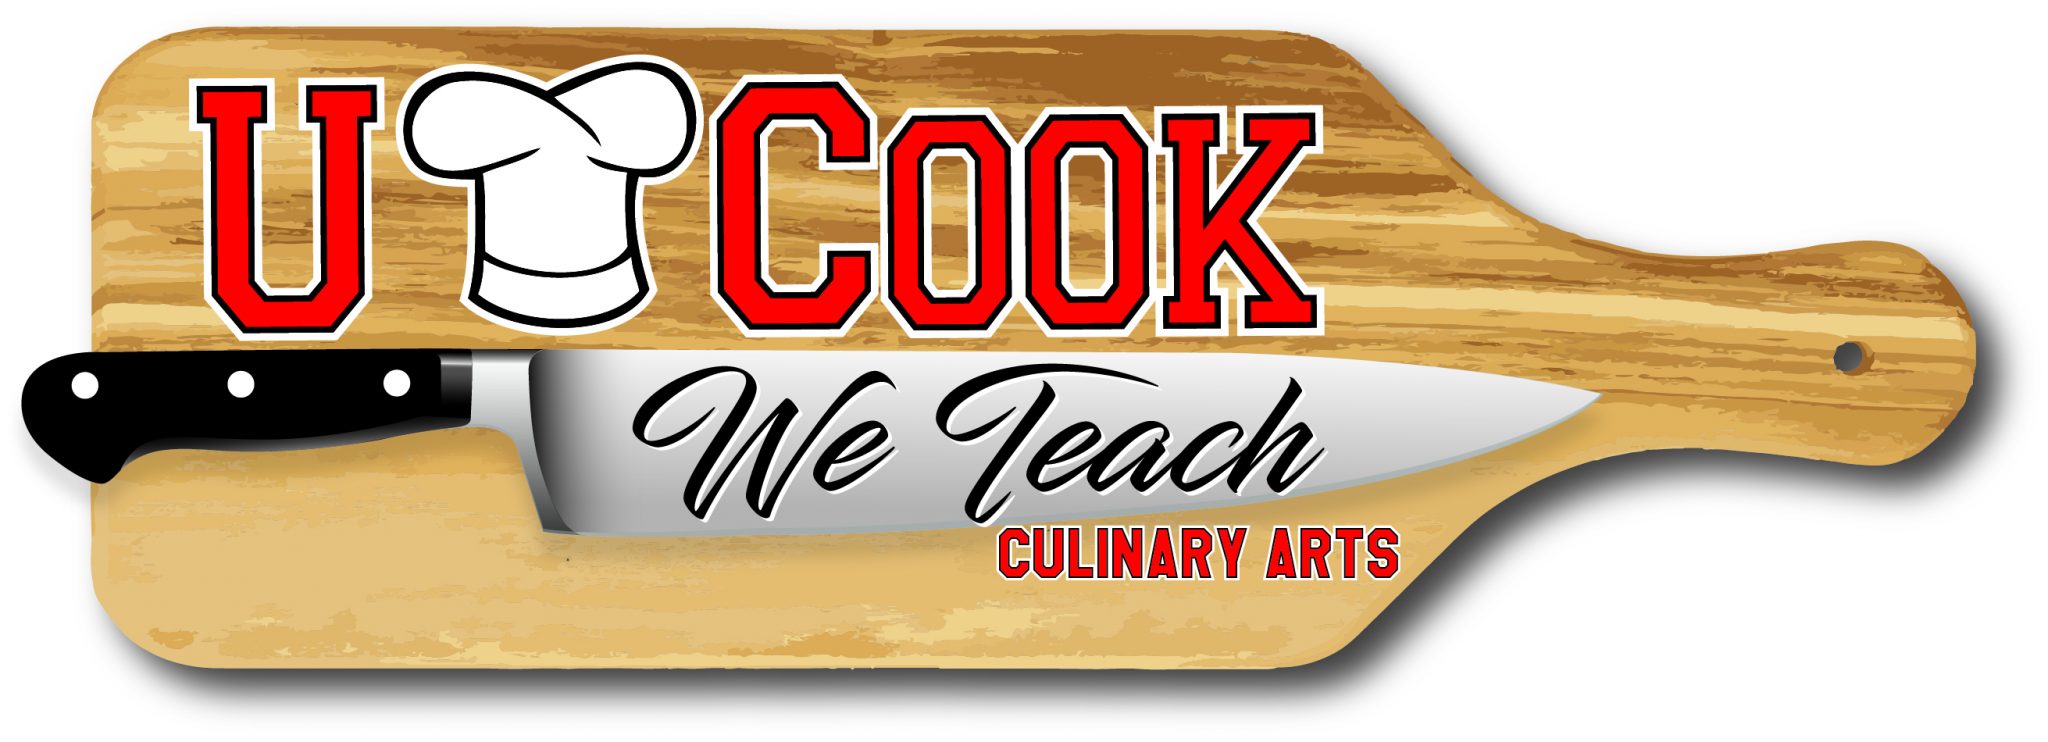 UCook We Teach Culinary Arts 